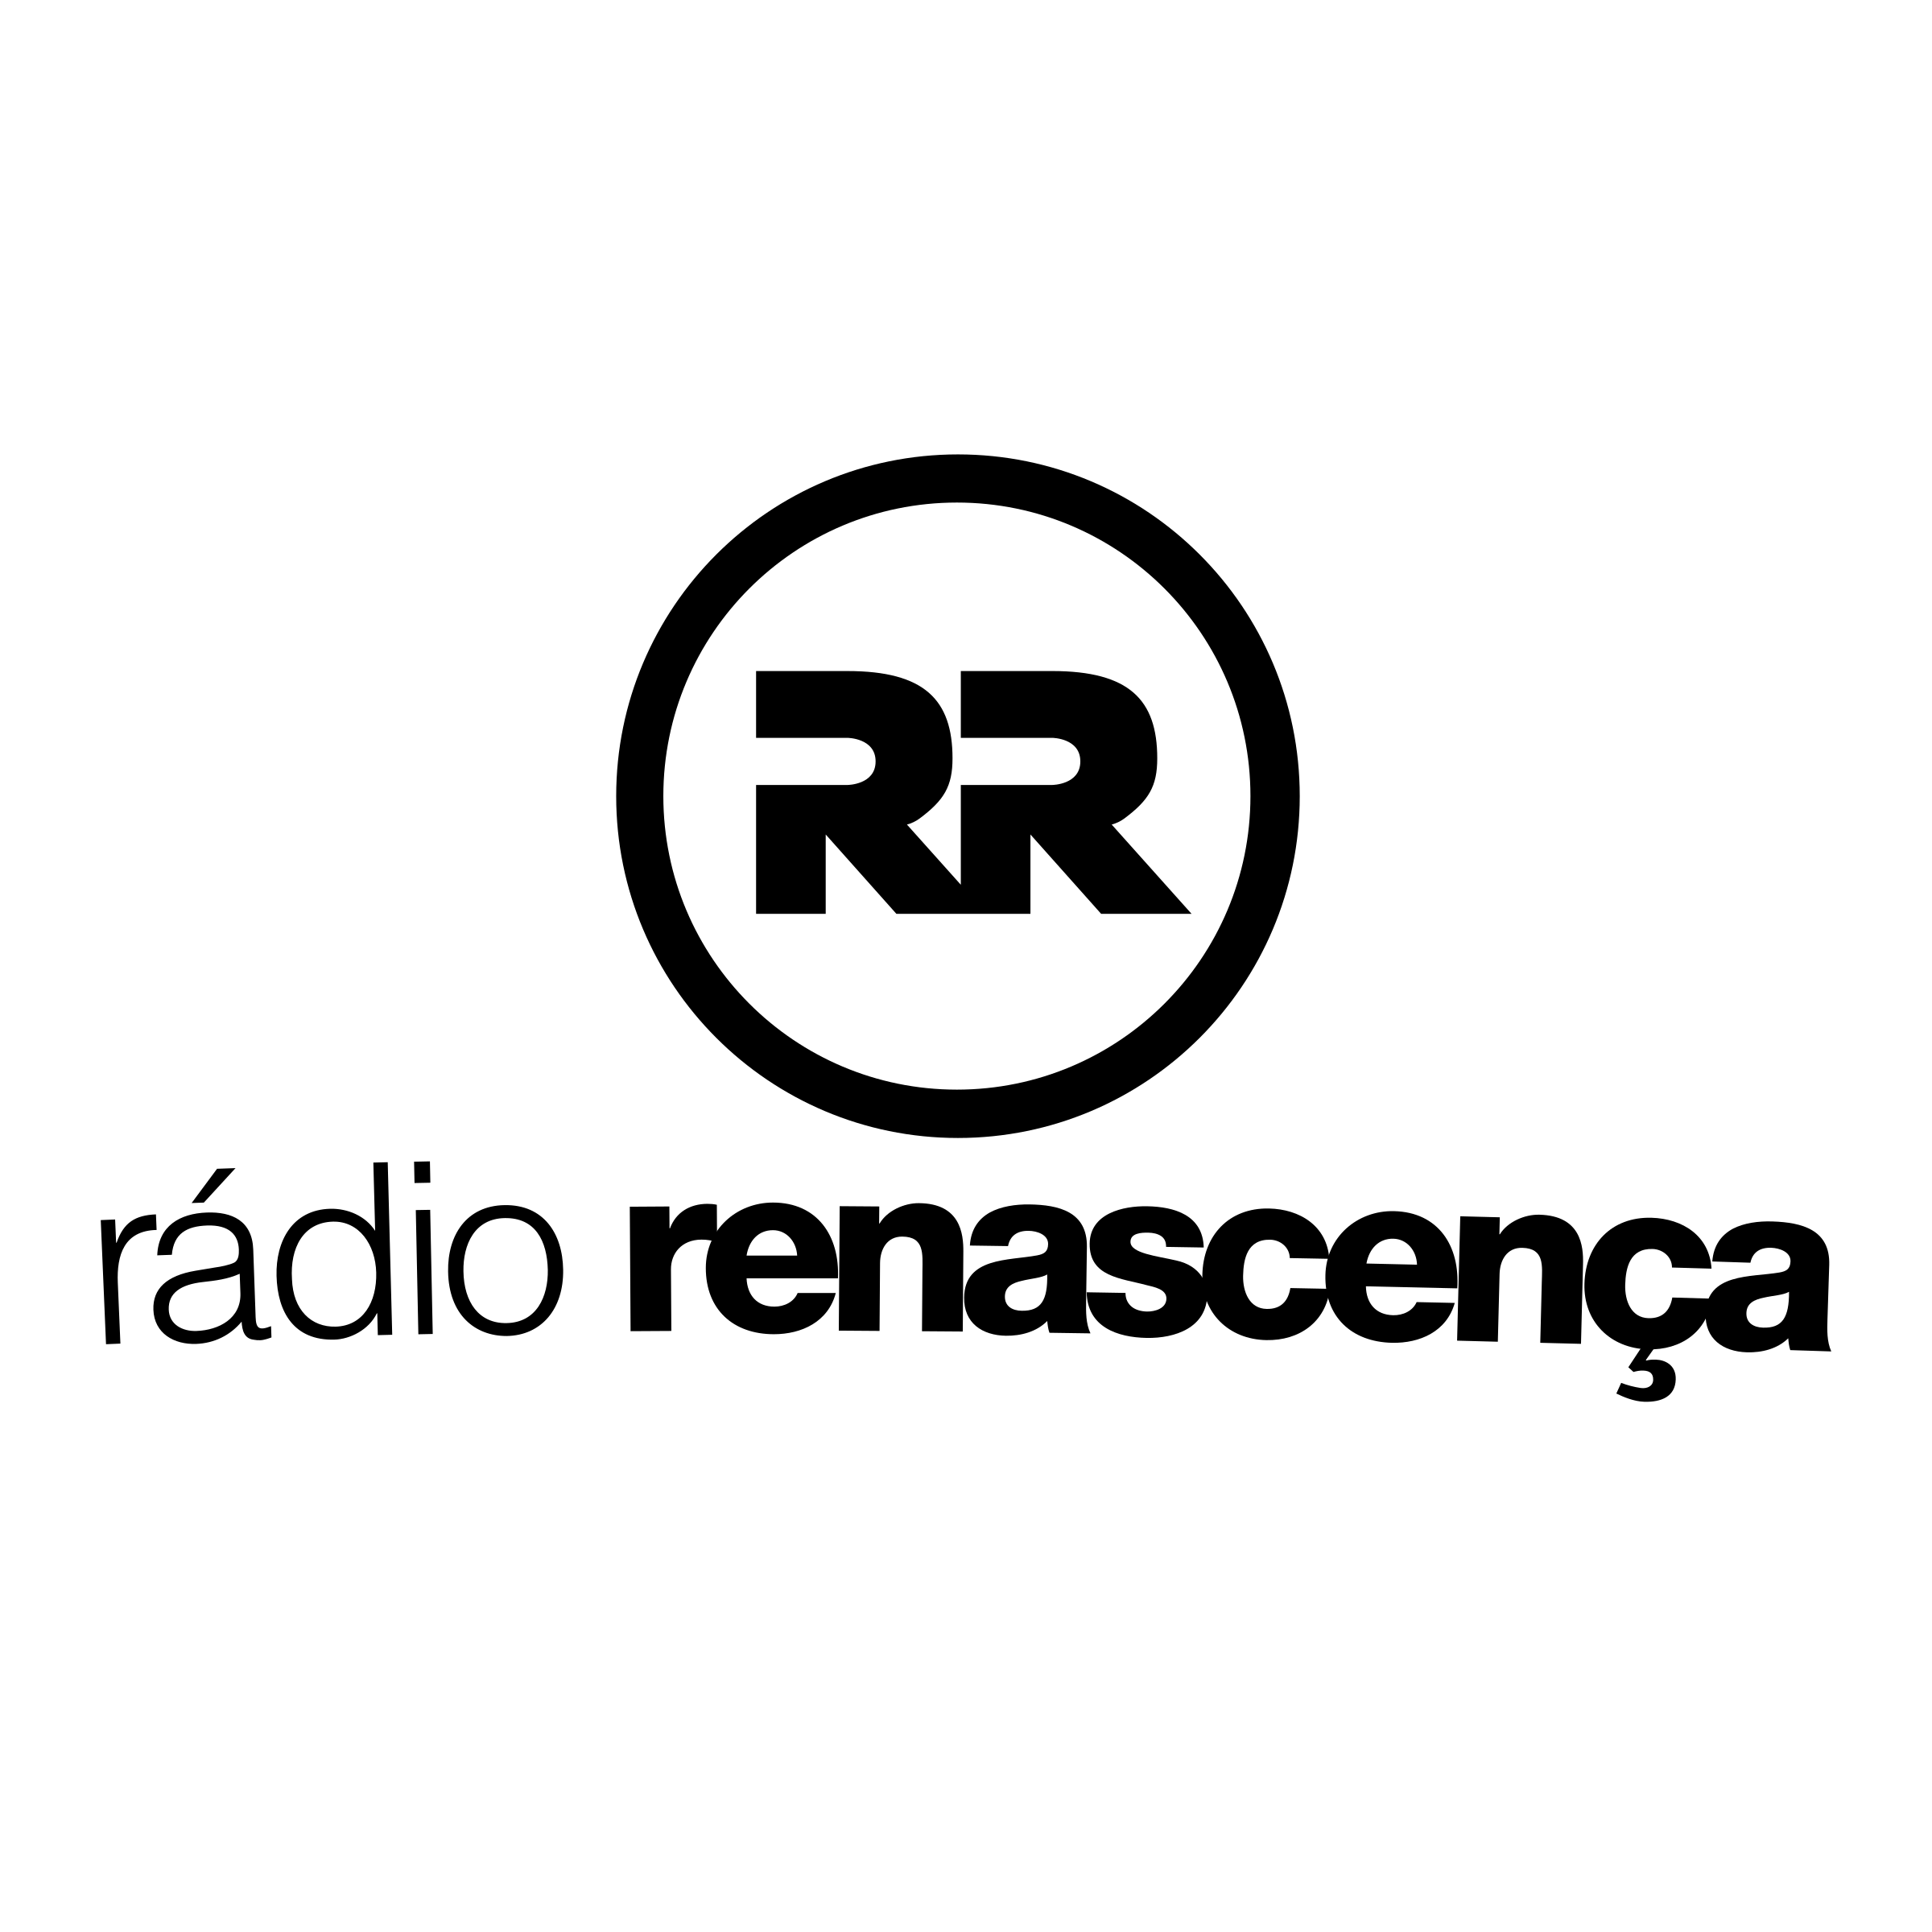 RR Logo - RR Logo PNG Transparent & SVG Vector